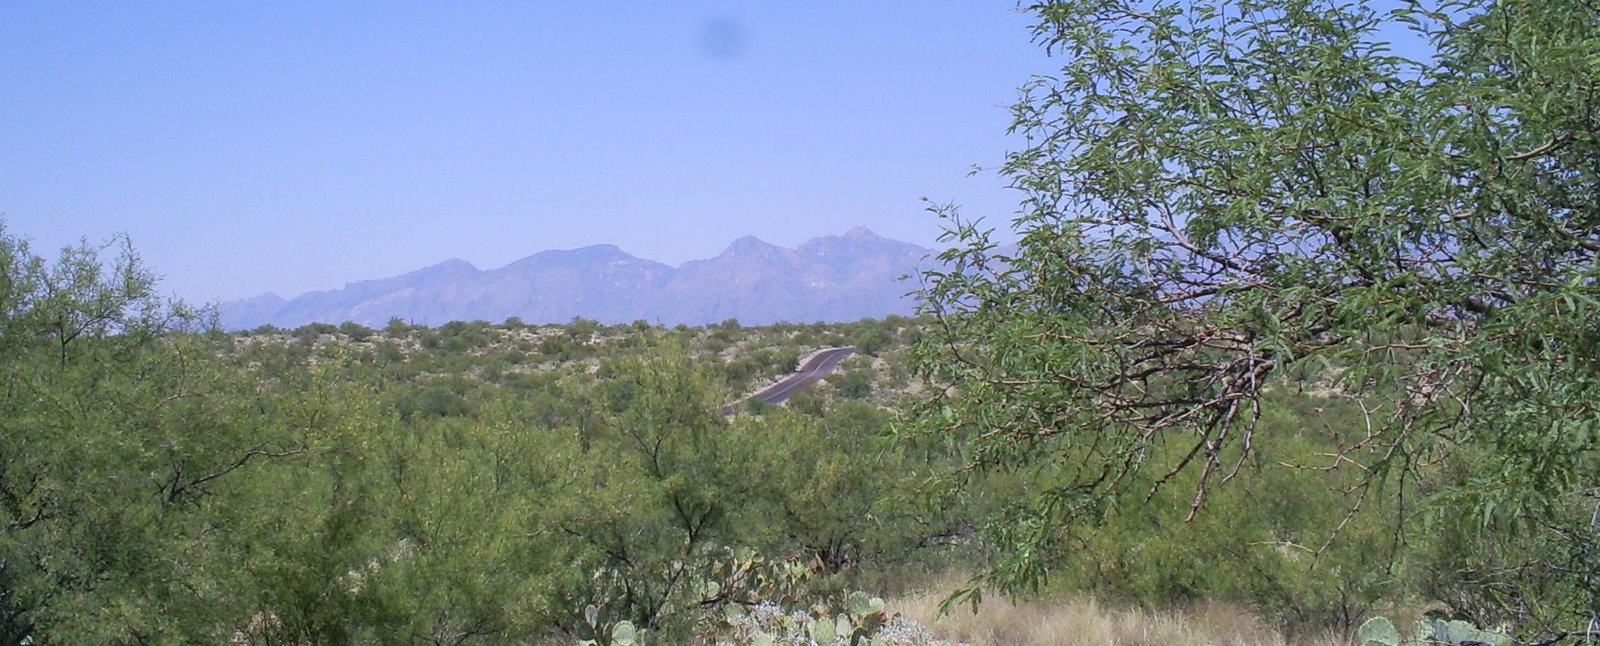 [2007-09-03+-+Saguaro+National+Park+8+Miler+058a.jpg]